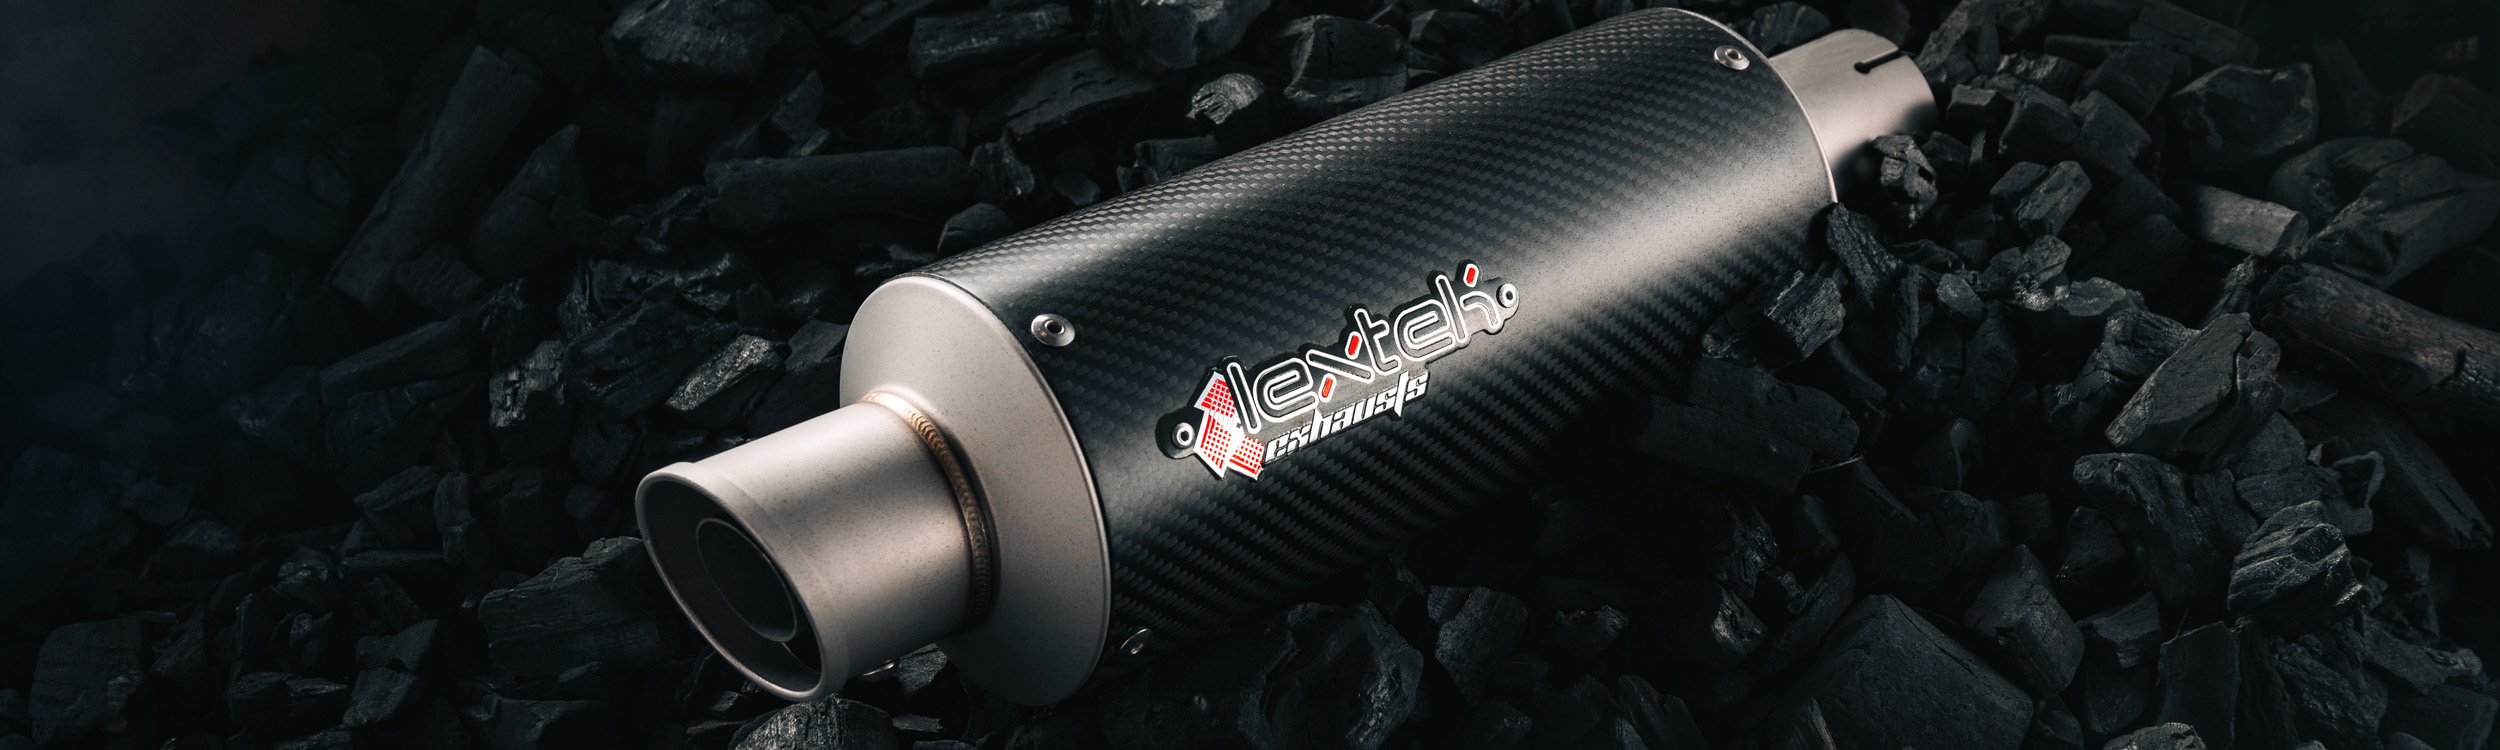 Lextek 2 x GP8C Carbon Fibre Exhaust Silencer 51mm Slip-on